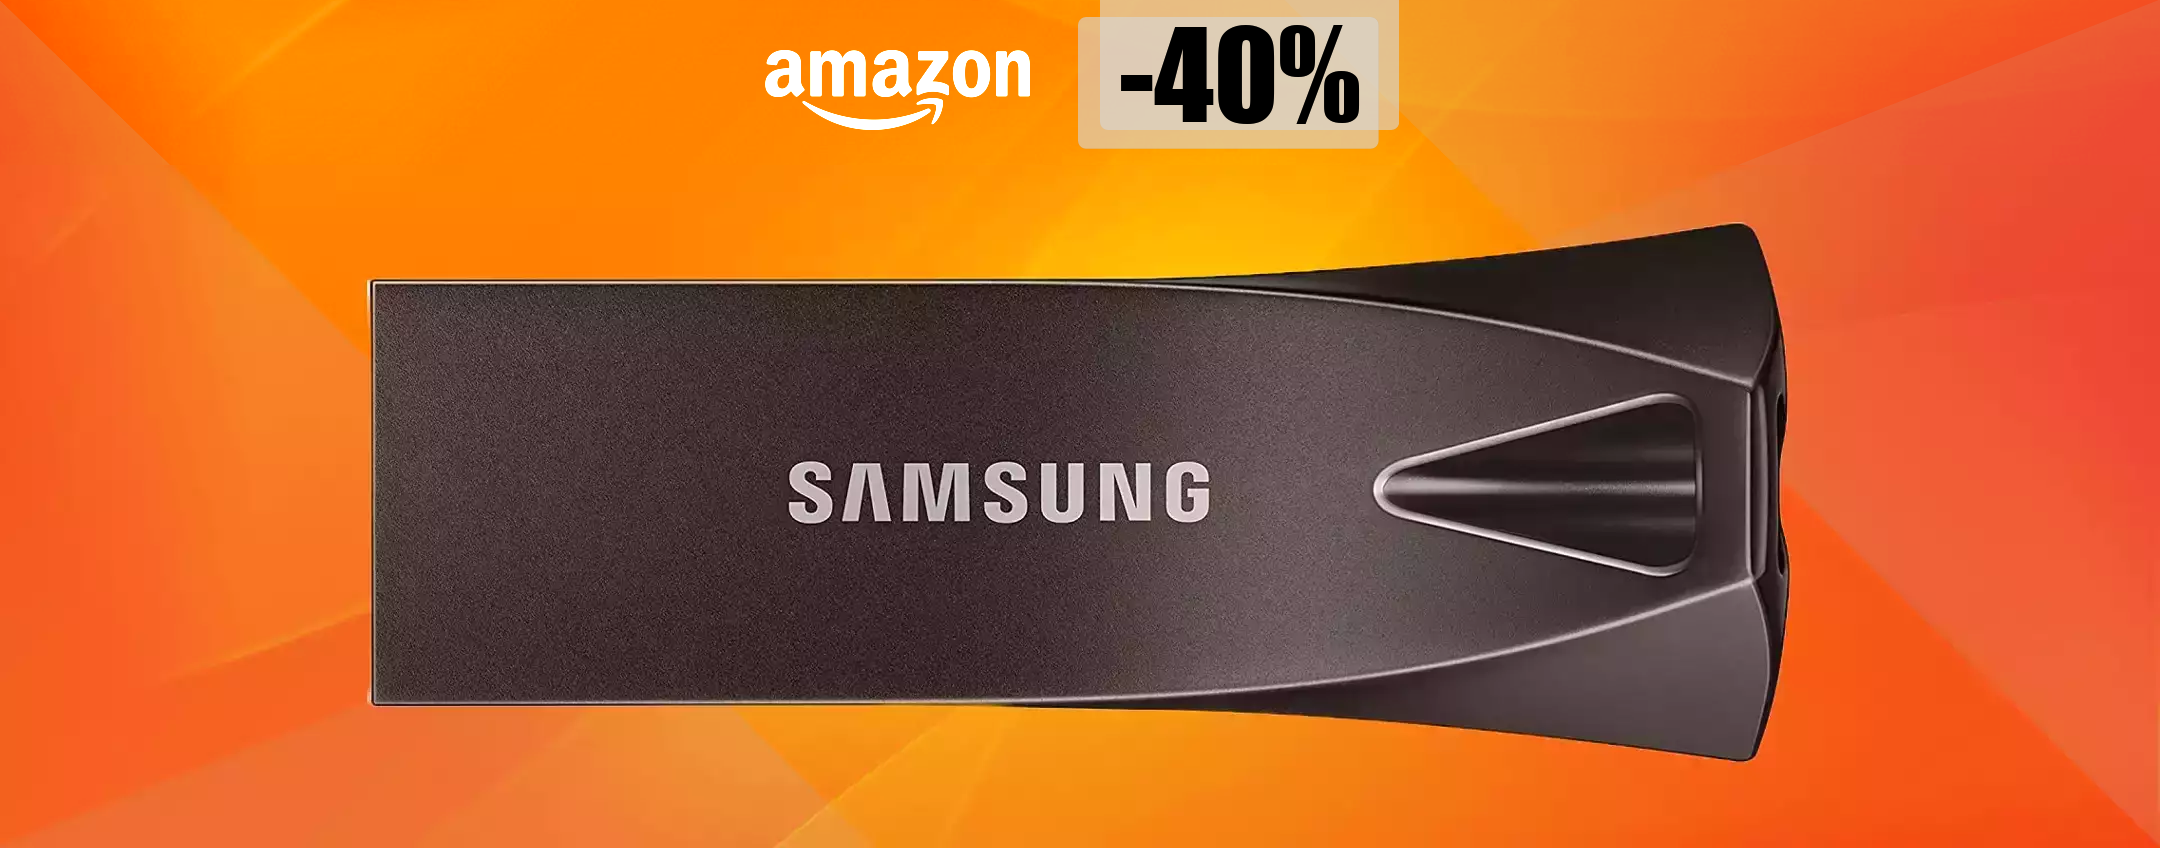 Chiavetta USB Samsung 256GB a soli 42€: offerta BOMBA (sconto 40%)